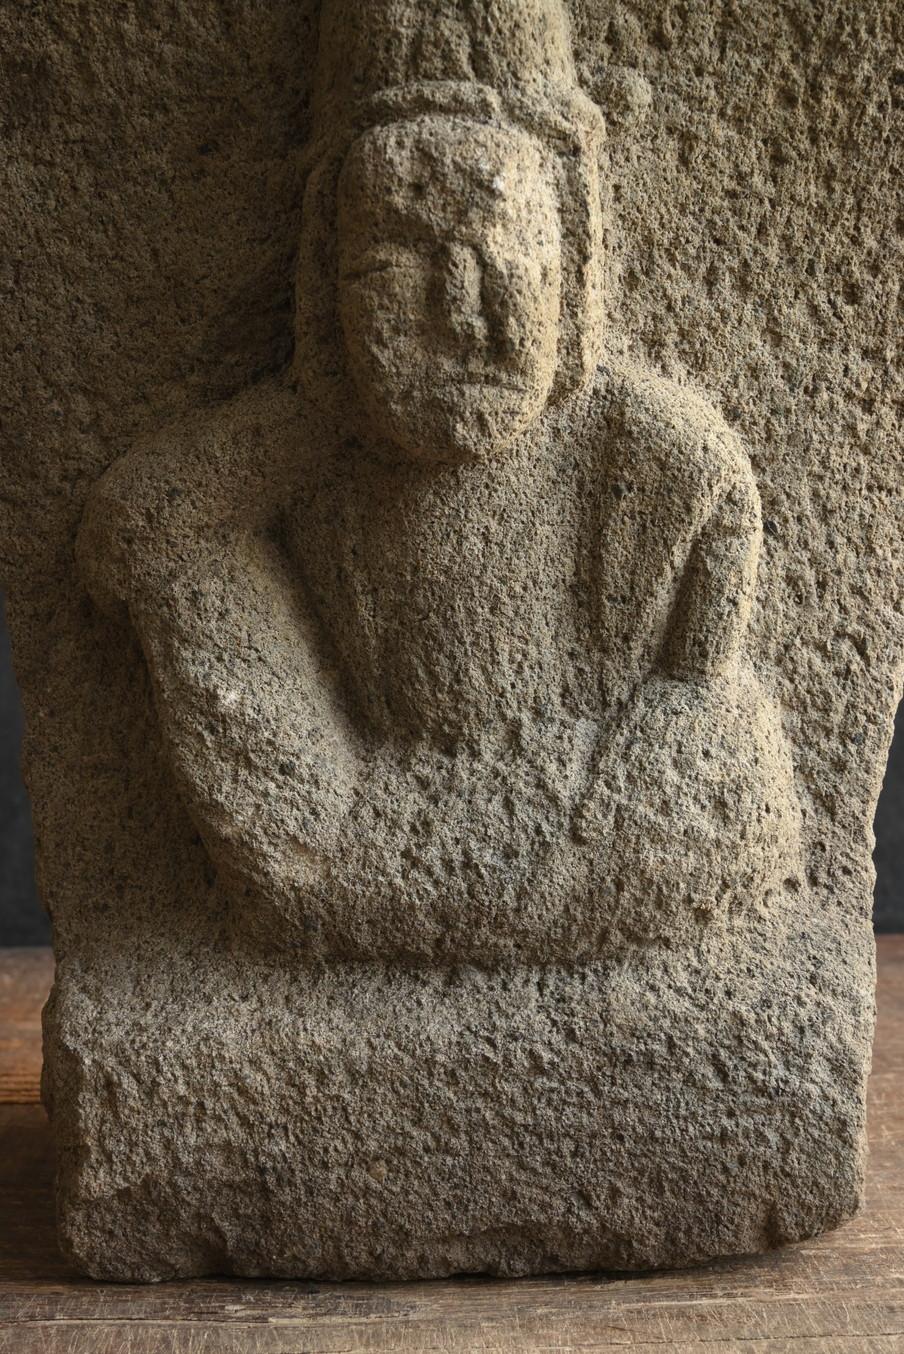 Japanischer antiker Buddha Nyoirin Kannon aus Stein aus Japan/1750-1850/Edo-Periode 1